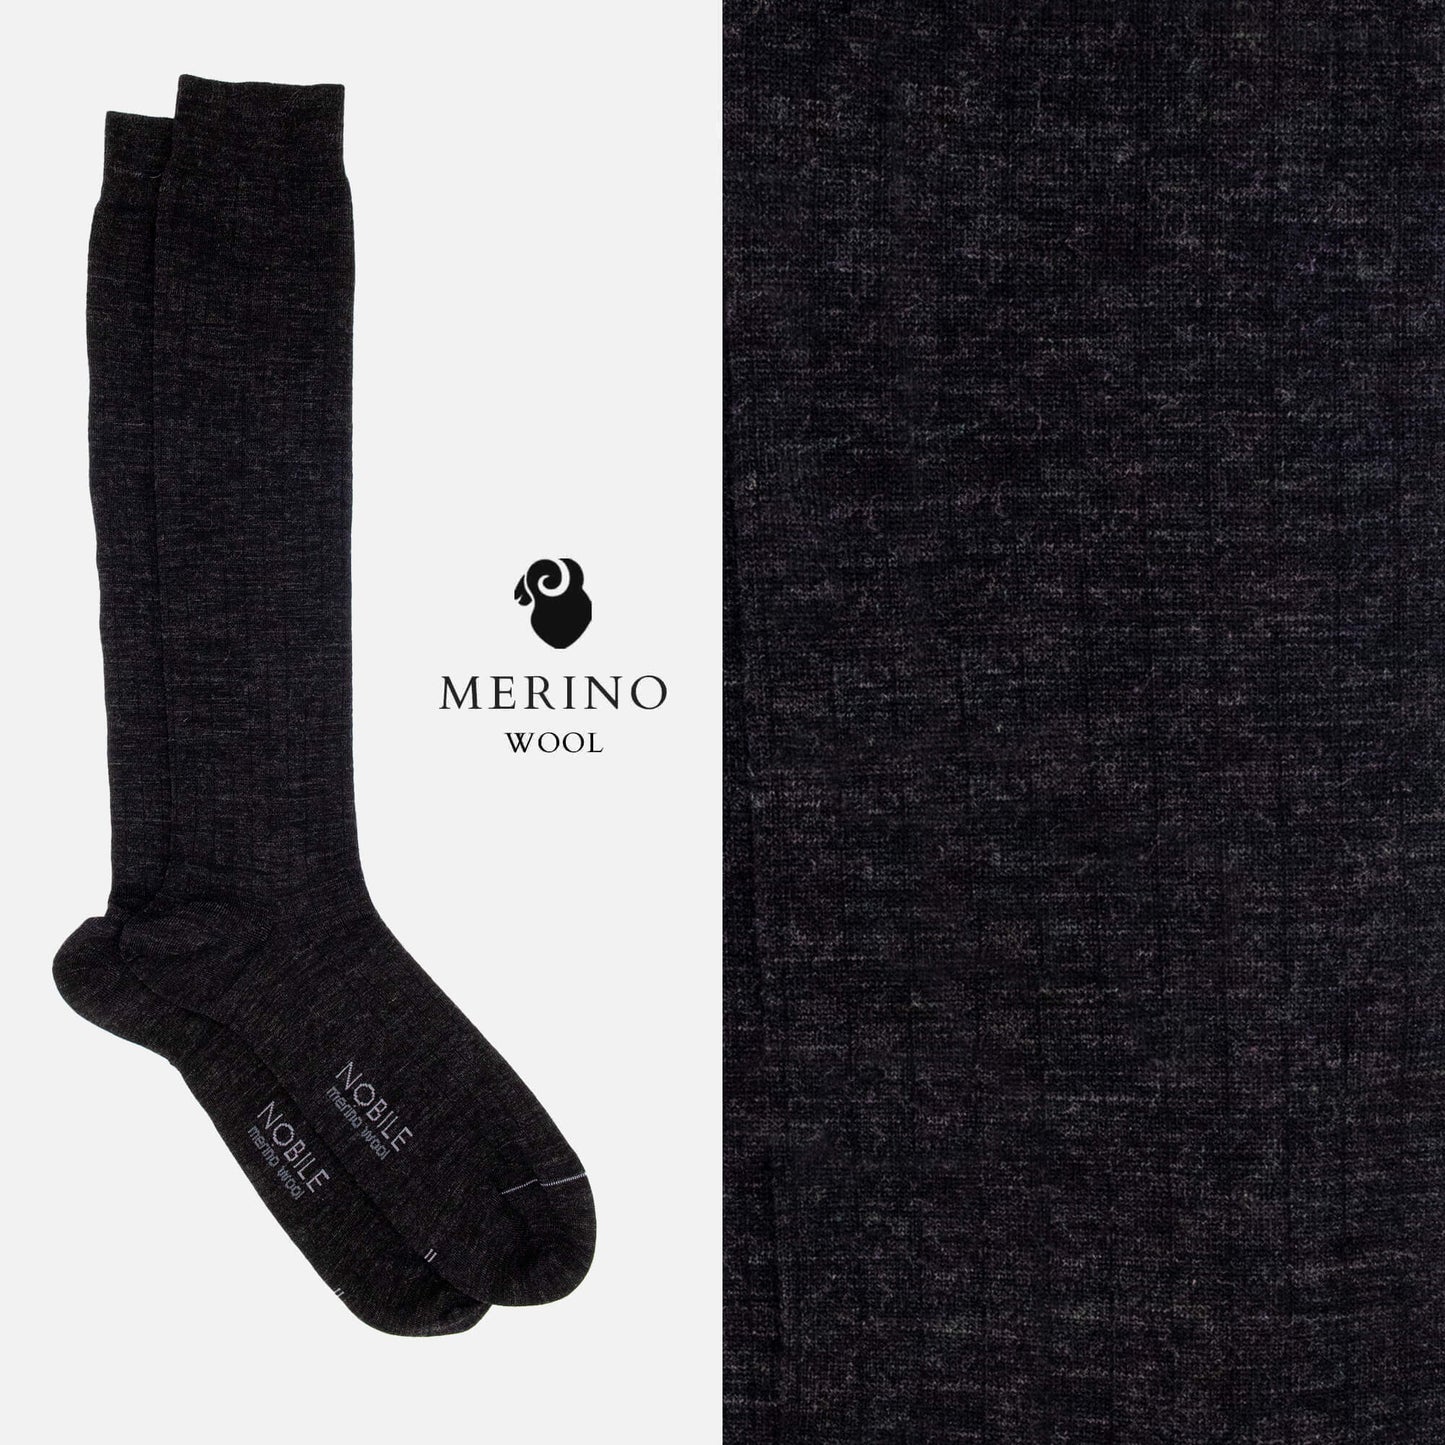 Northen Ribs - Box of 6 knee high socks in Merino wool with micro ribs